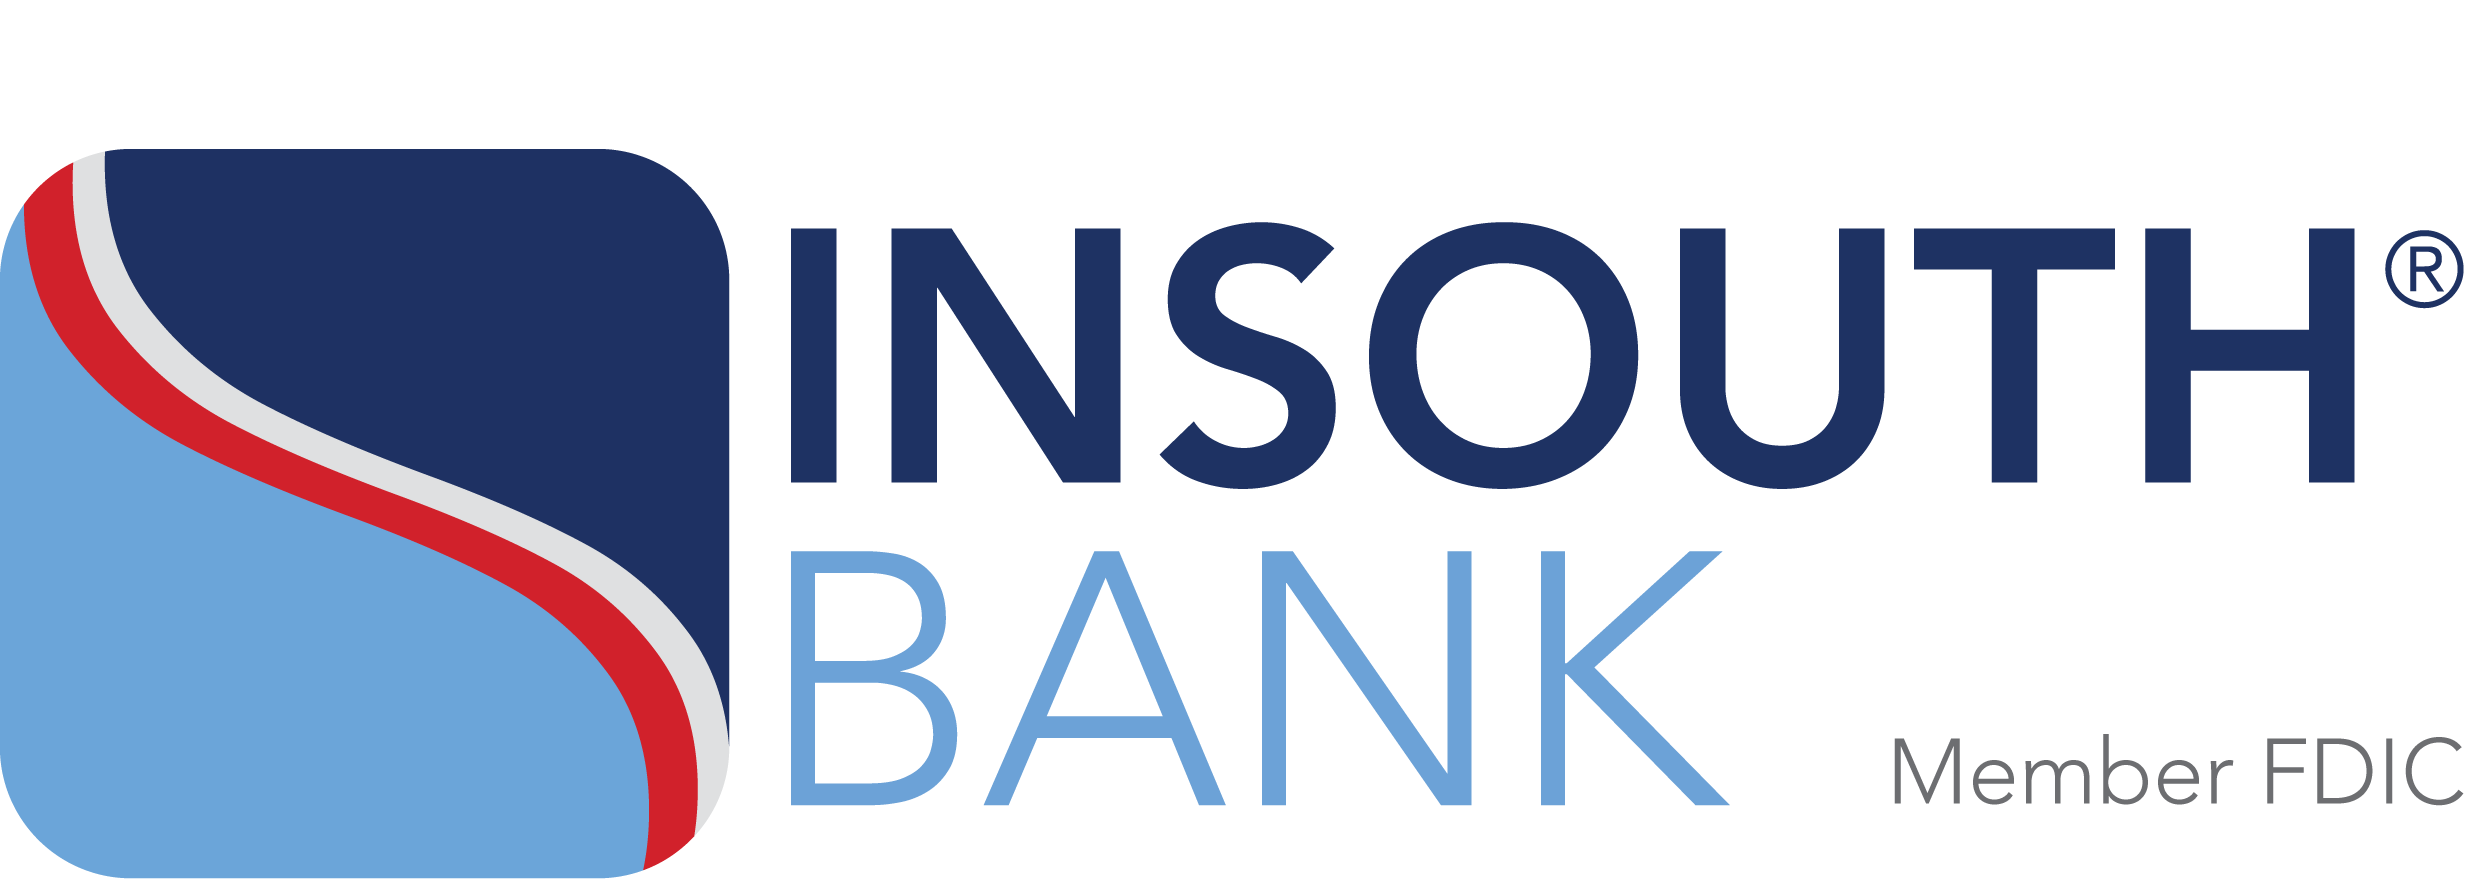 INSOUTH Bank logo